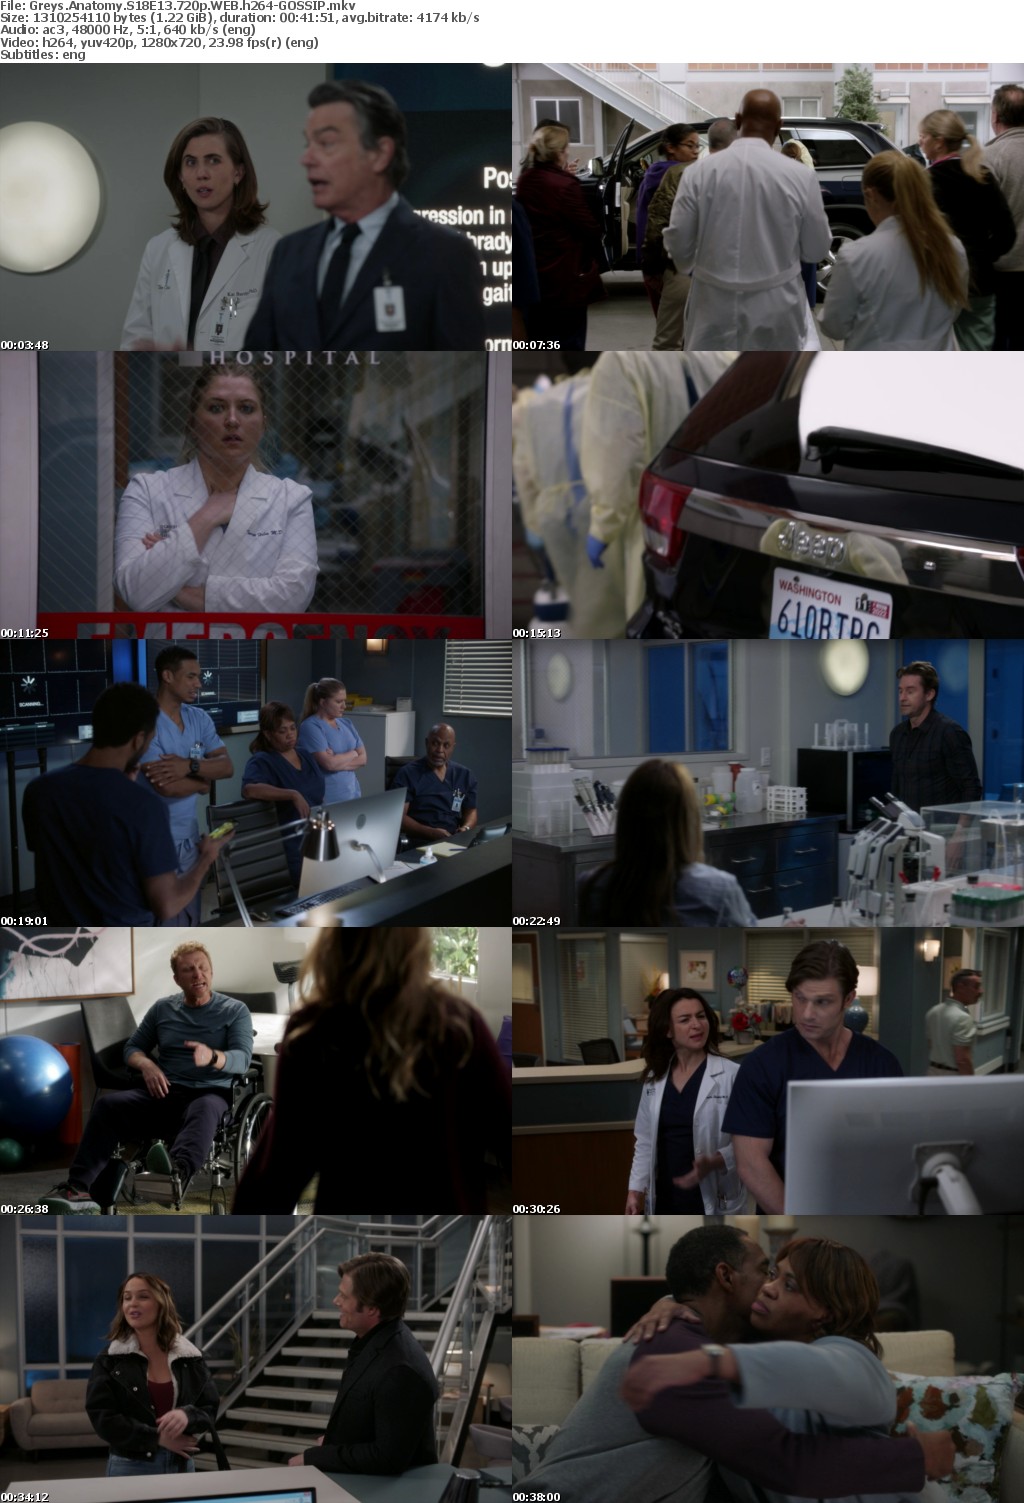 Greys Anatomy S18E13 720p WEB h264-GOSSIP